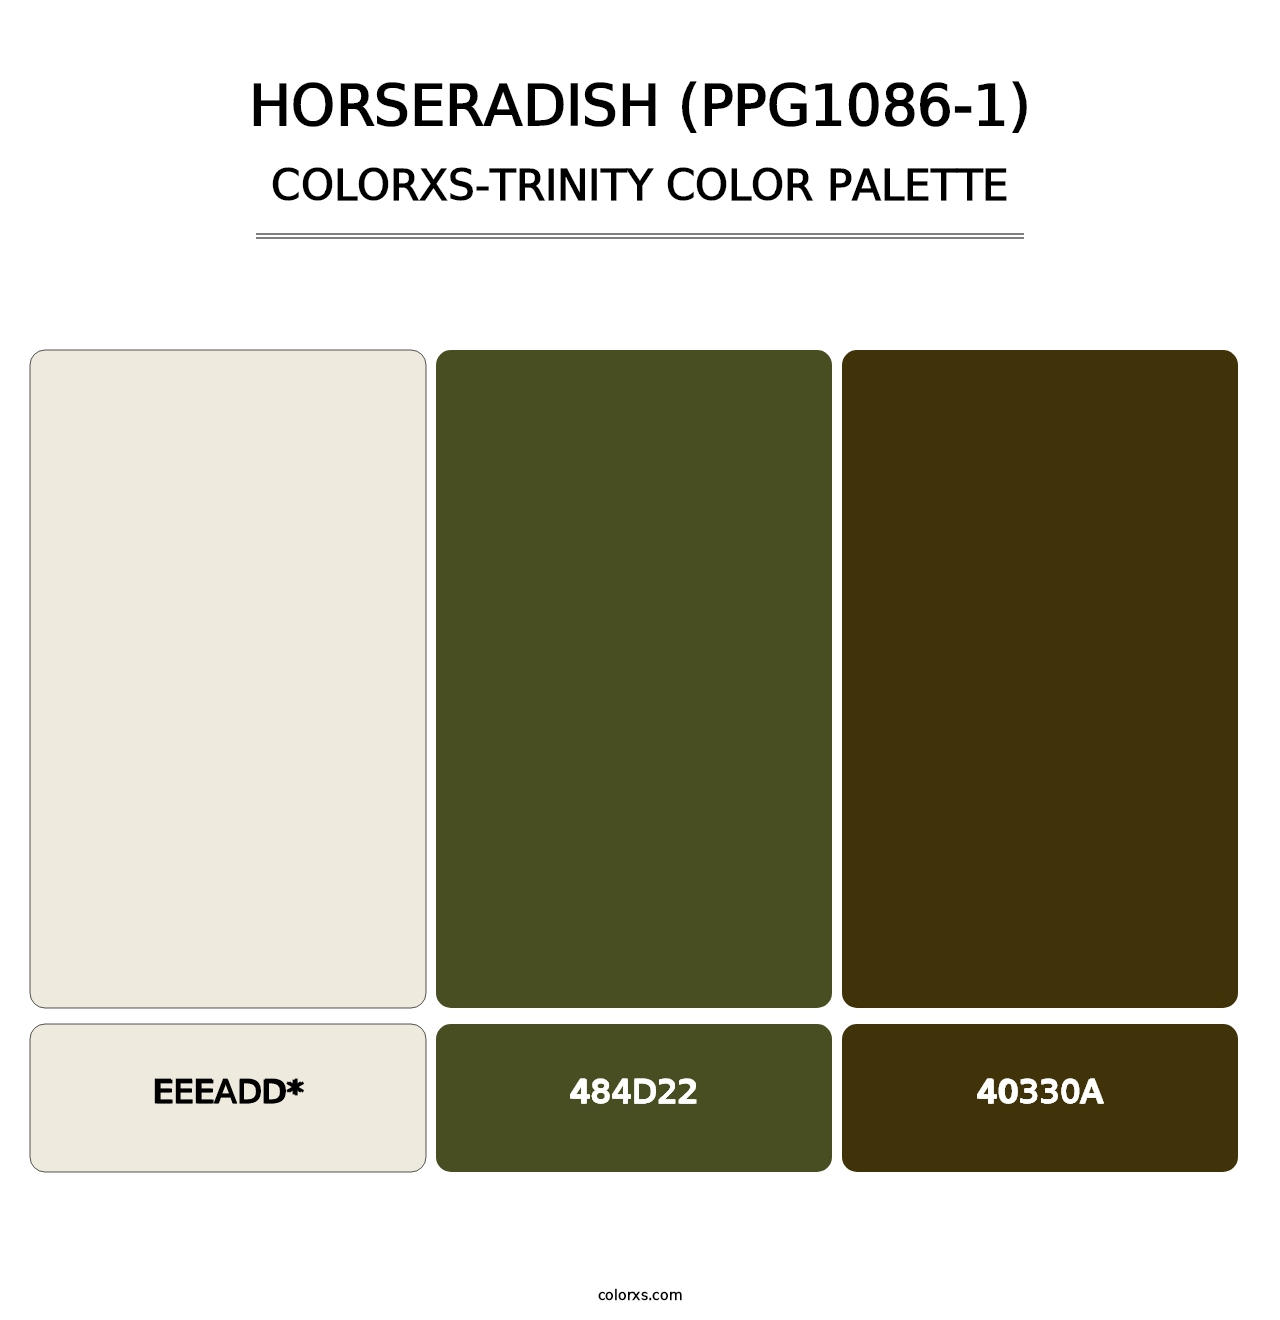 Horseradish (PPG1086-1) - Colorxs Trinity Palette